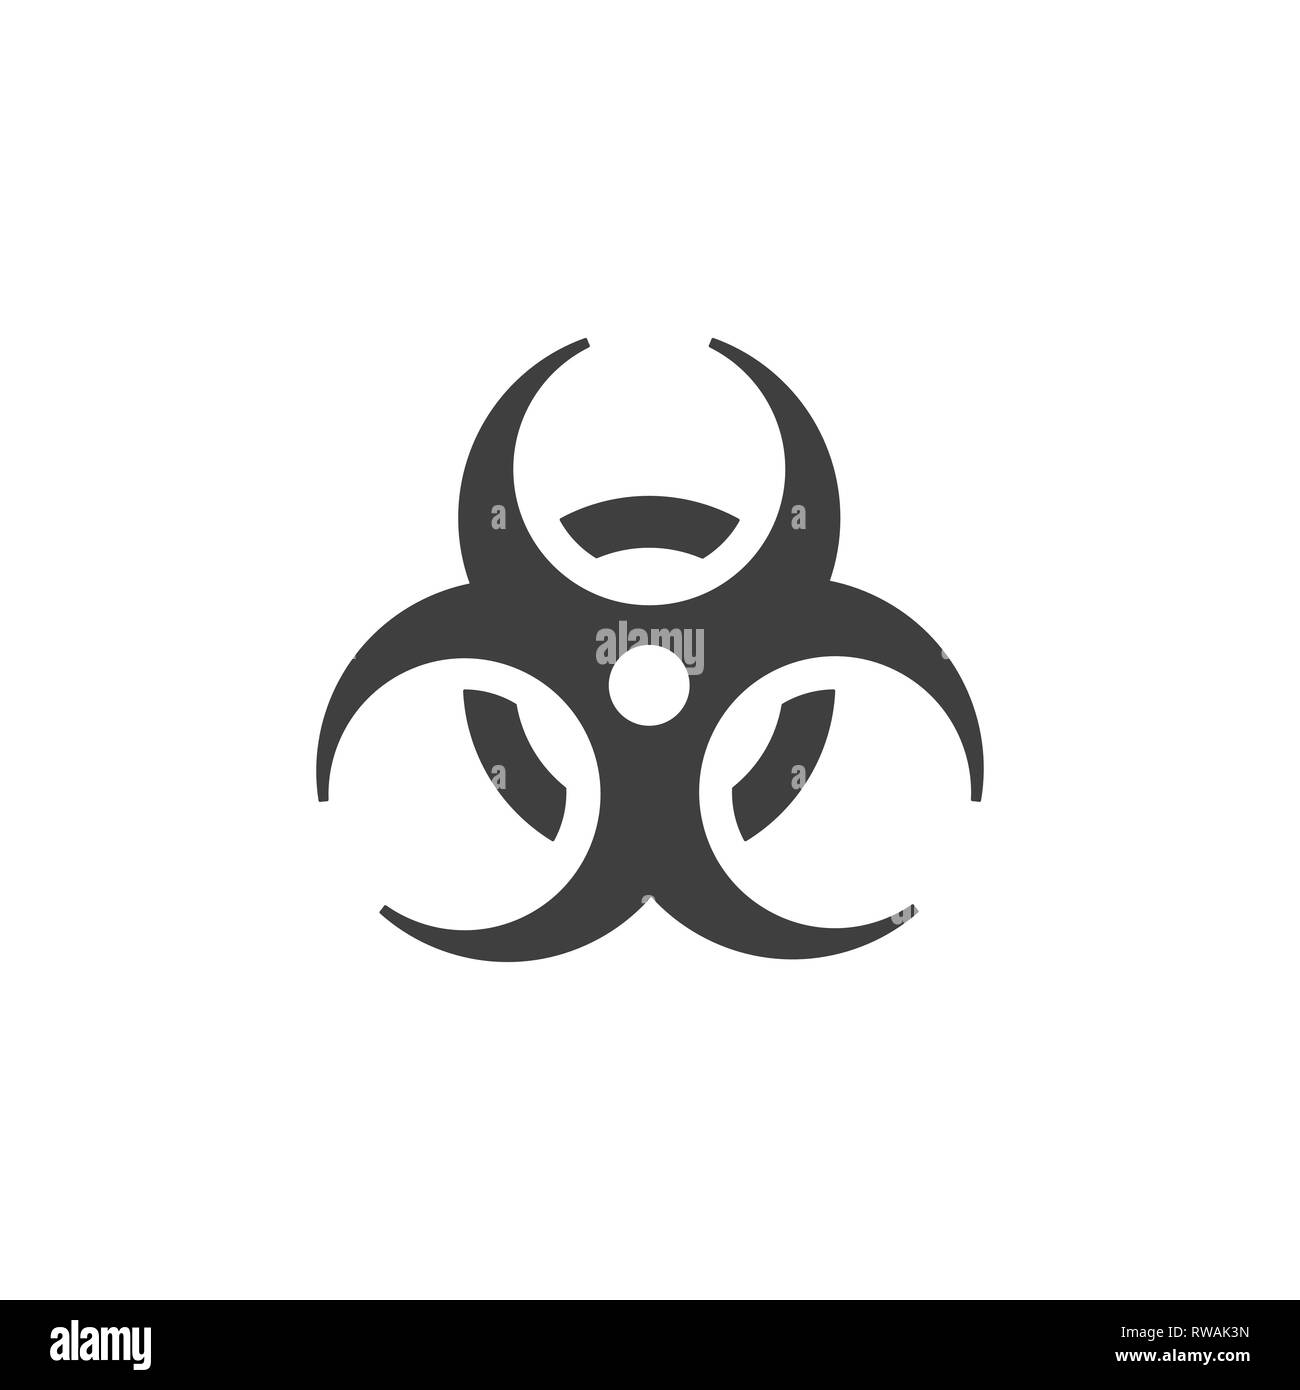 Toxic radioactive medical icon simple flat illustration. Stock Vector